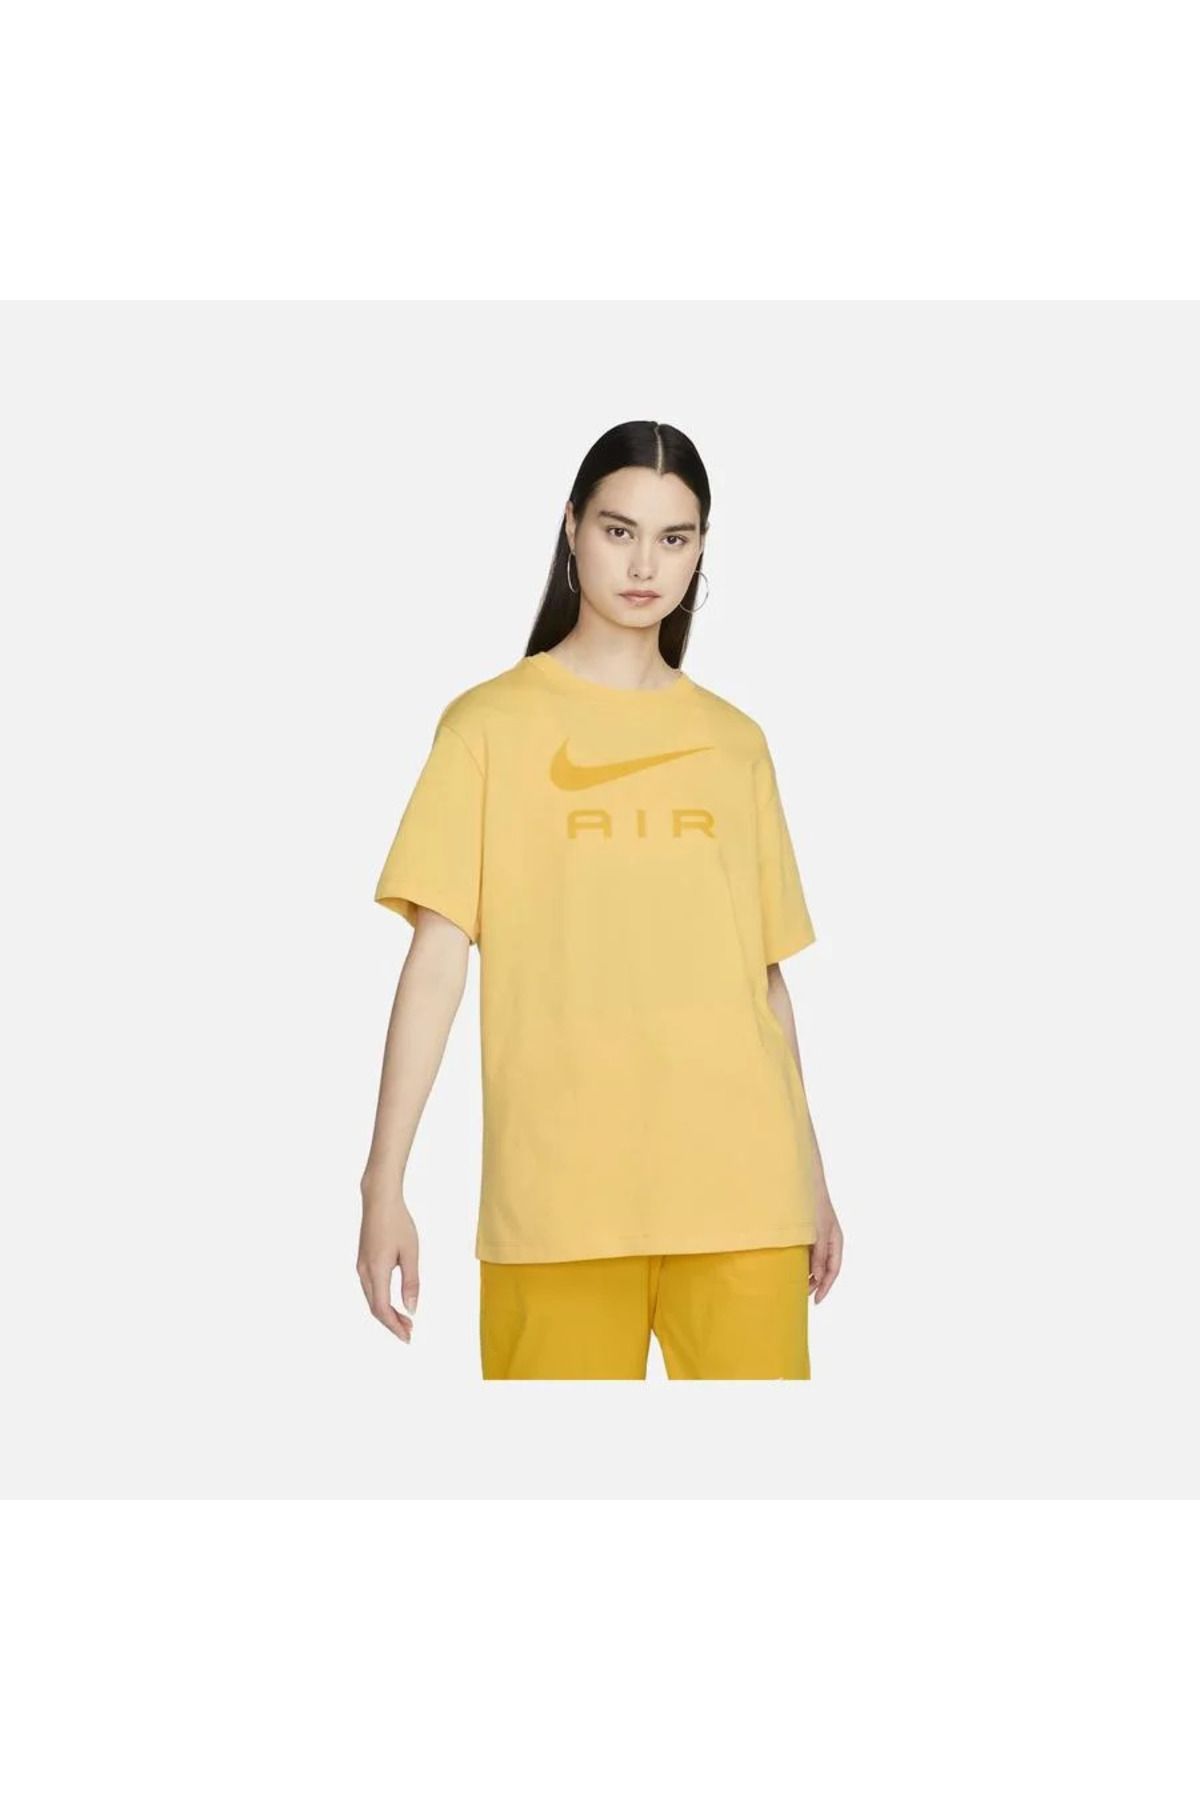 Nike Sportswear Air Graphic Boyfriend Short-Sleeve bol kesim  Kadın sarı   t-shirt dx7918